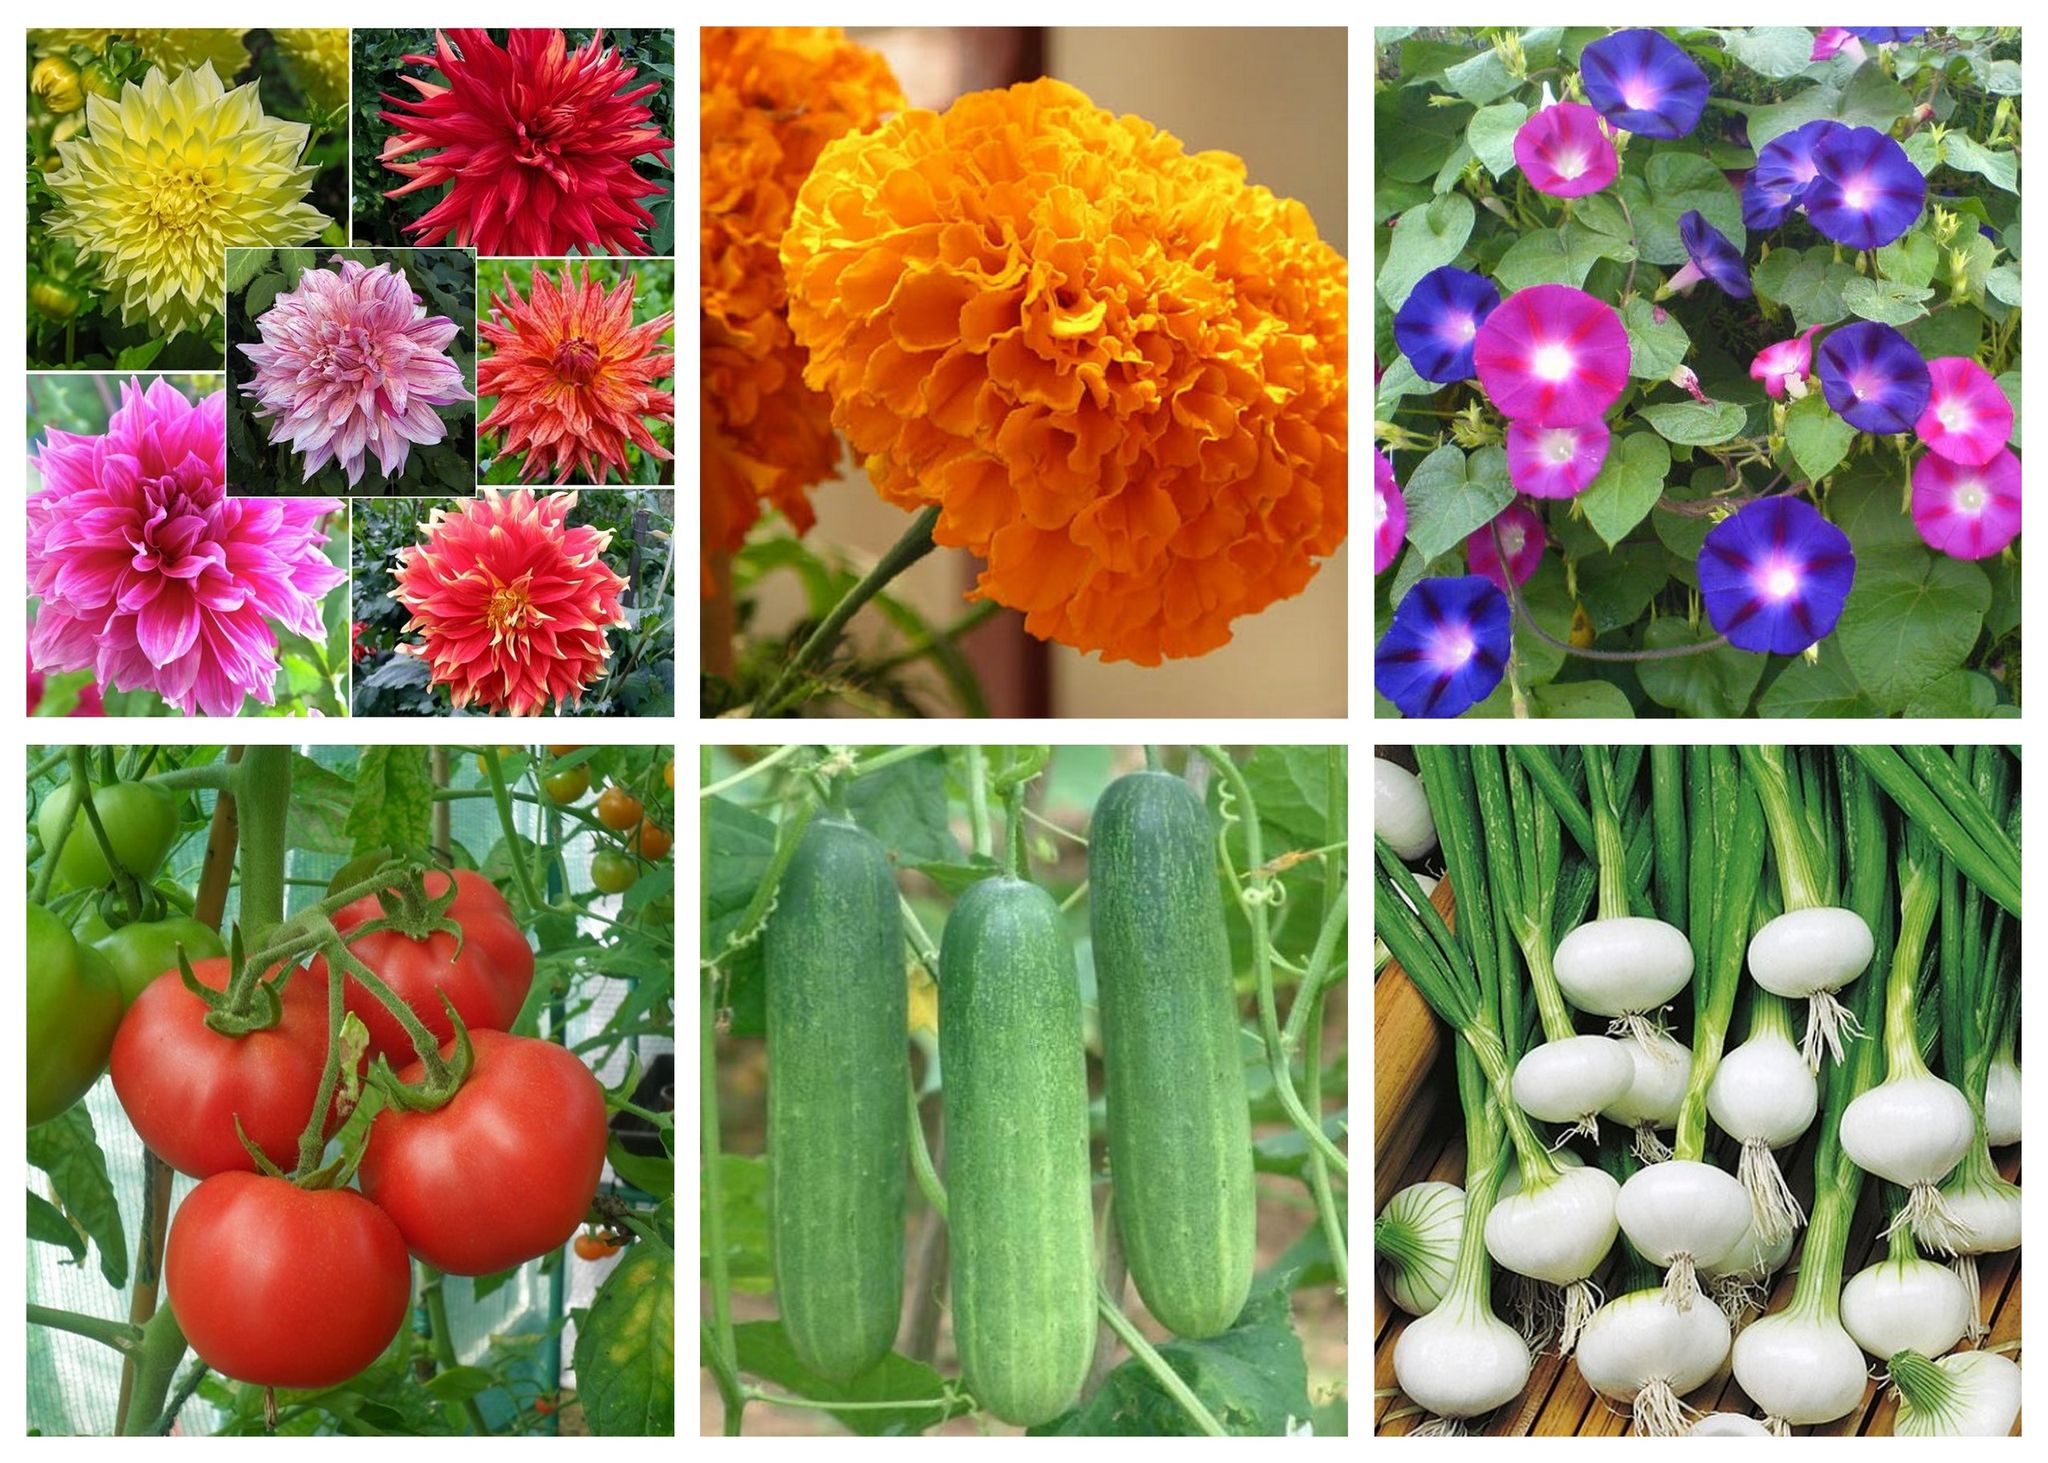 SimXotic Seeds Combo - Dahlia|Marigold|Morning Glory Ipomea|Tomato|Cucumber|White Onion Seeds F9.6